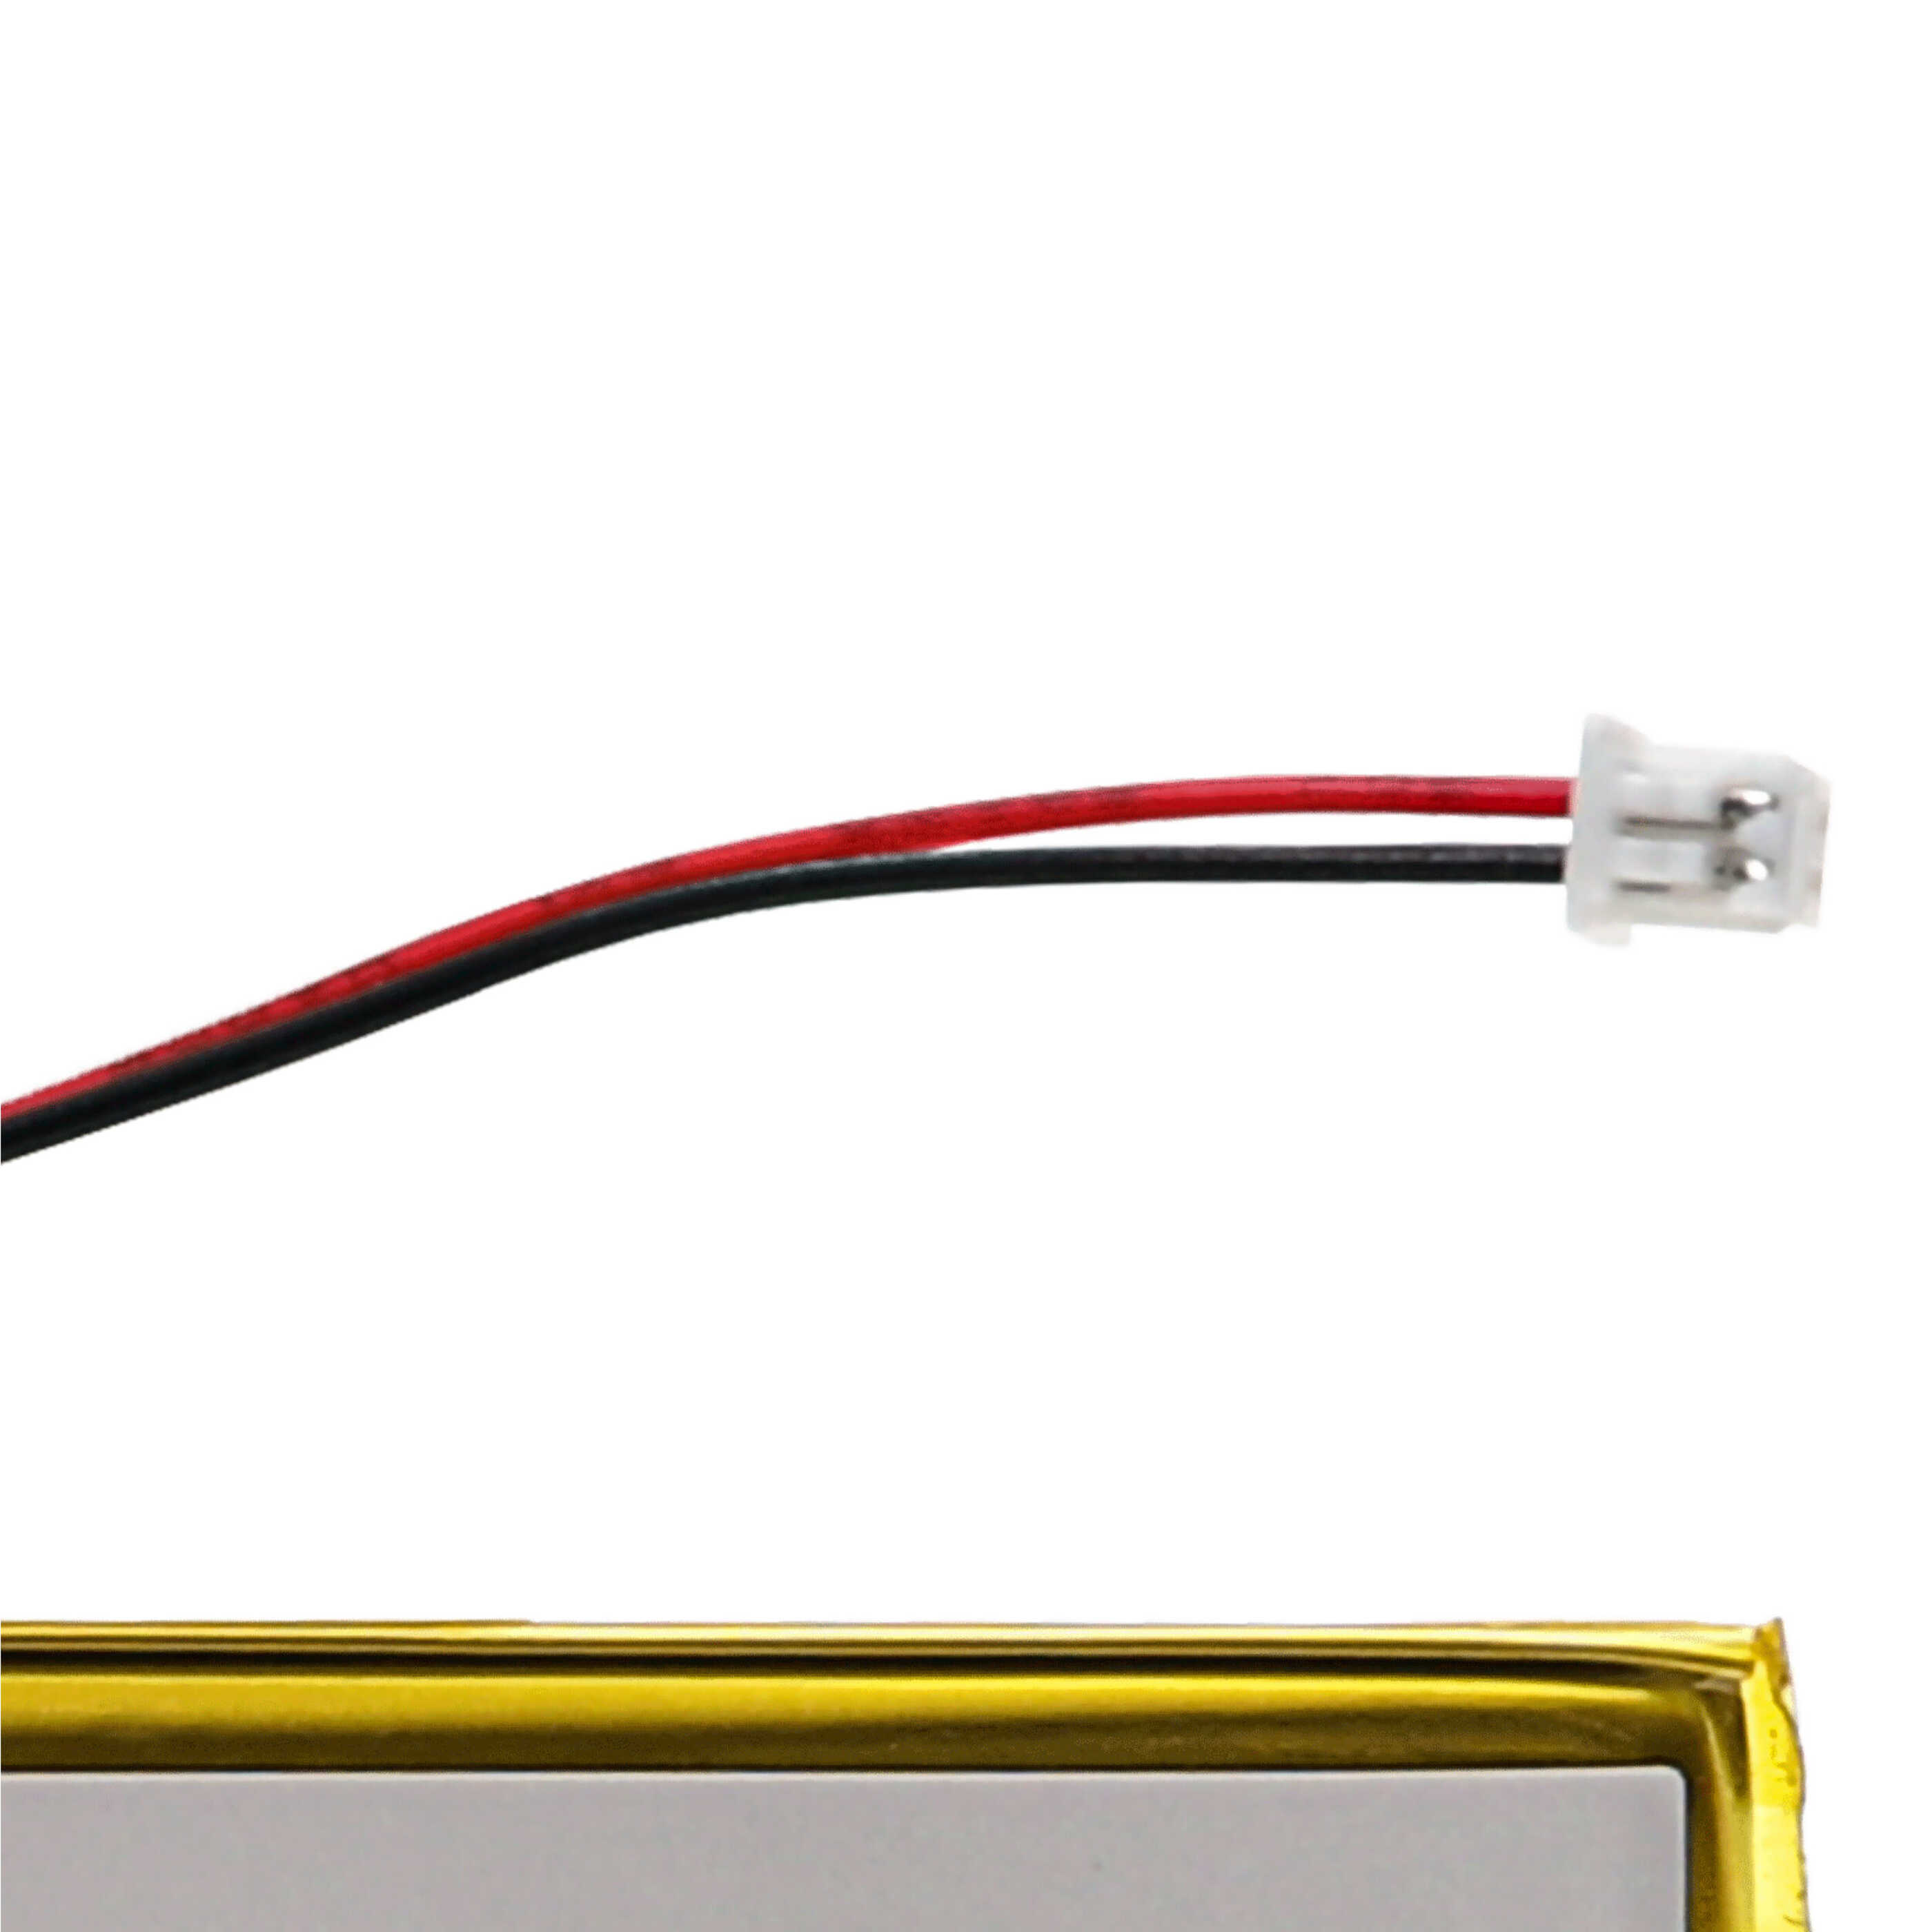 Batería reemplaza Iriver DA2WB18D2 para reproductor MP3 Iriver - 2200 mAh 3,7 V Li-poli